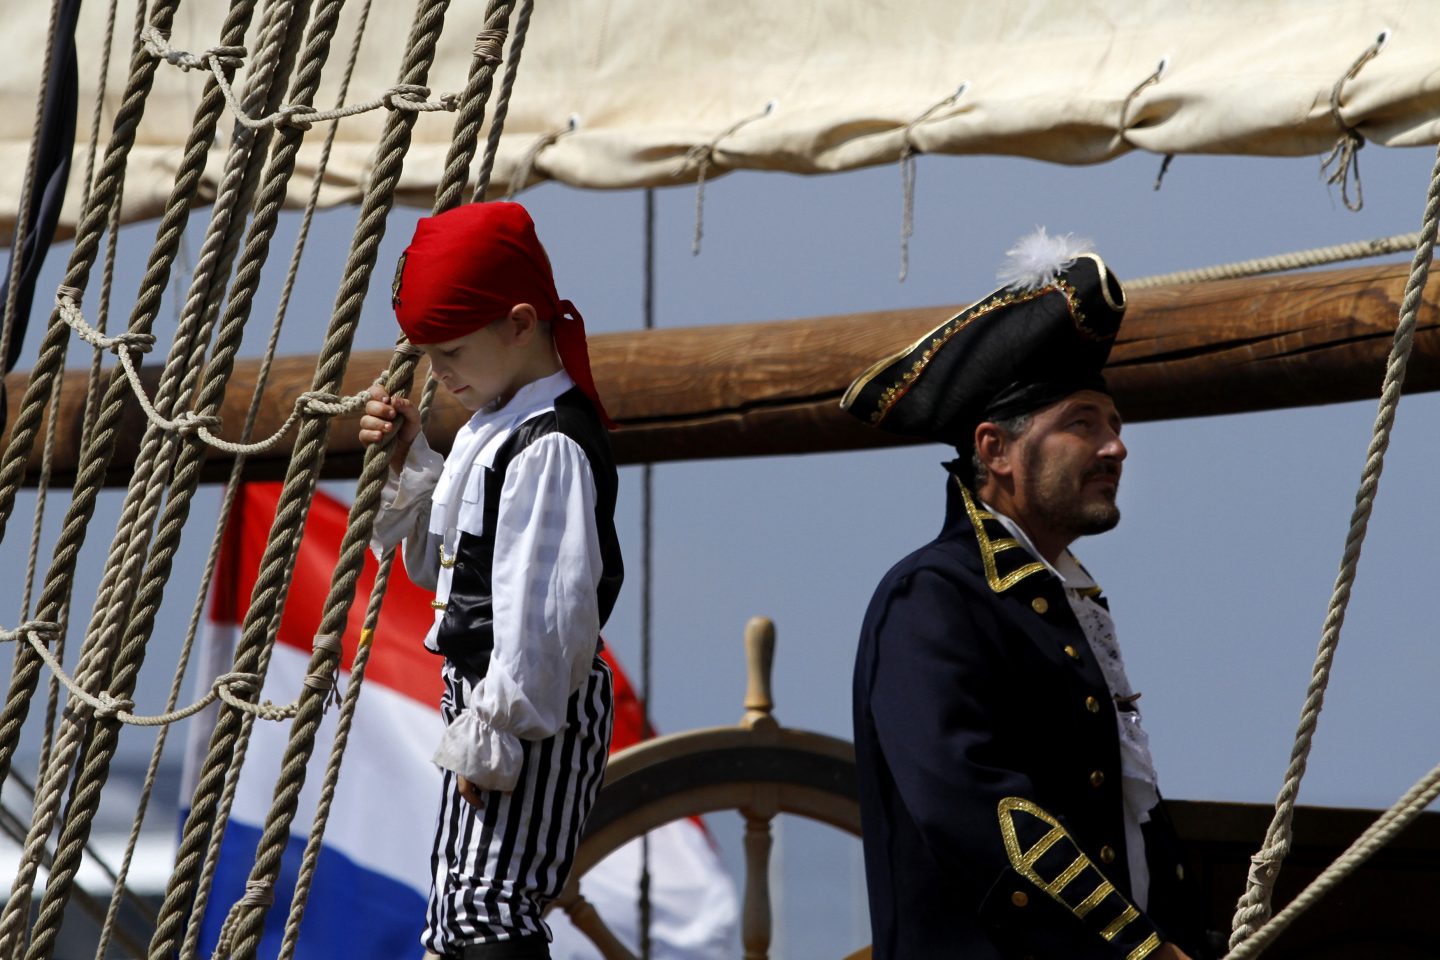 Pirates’ show aboard corsair ship in Athens